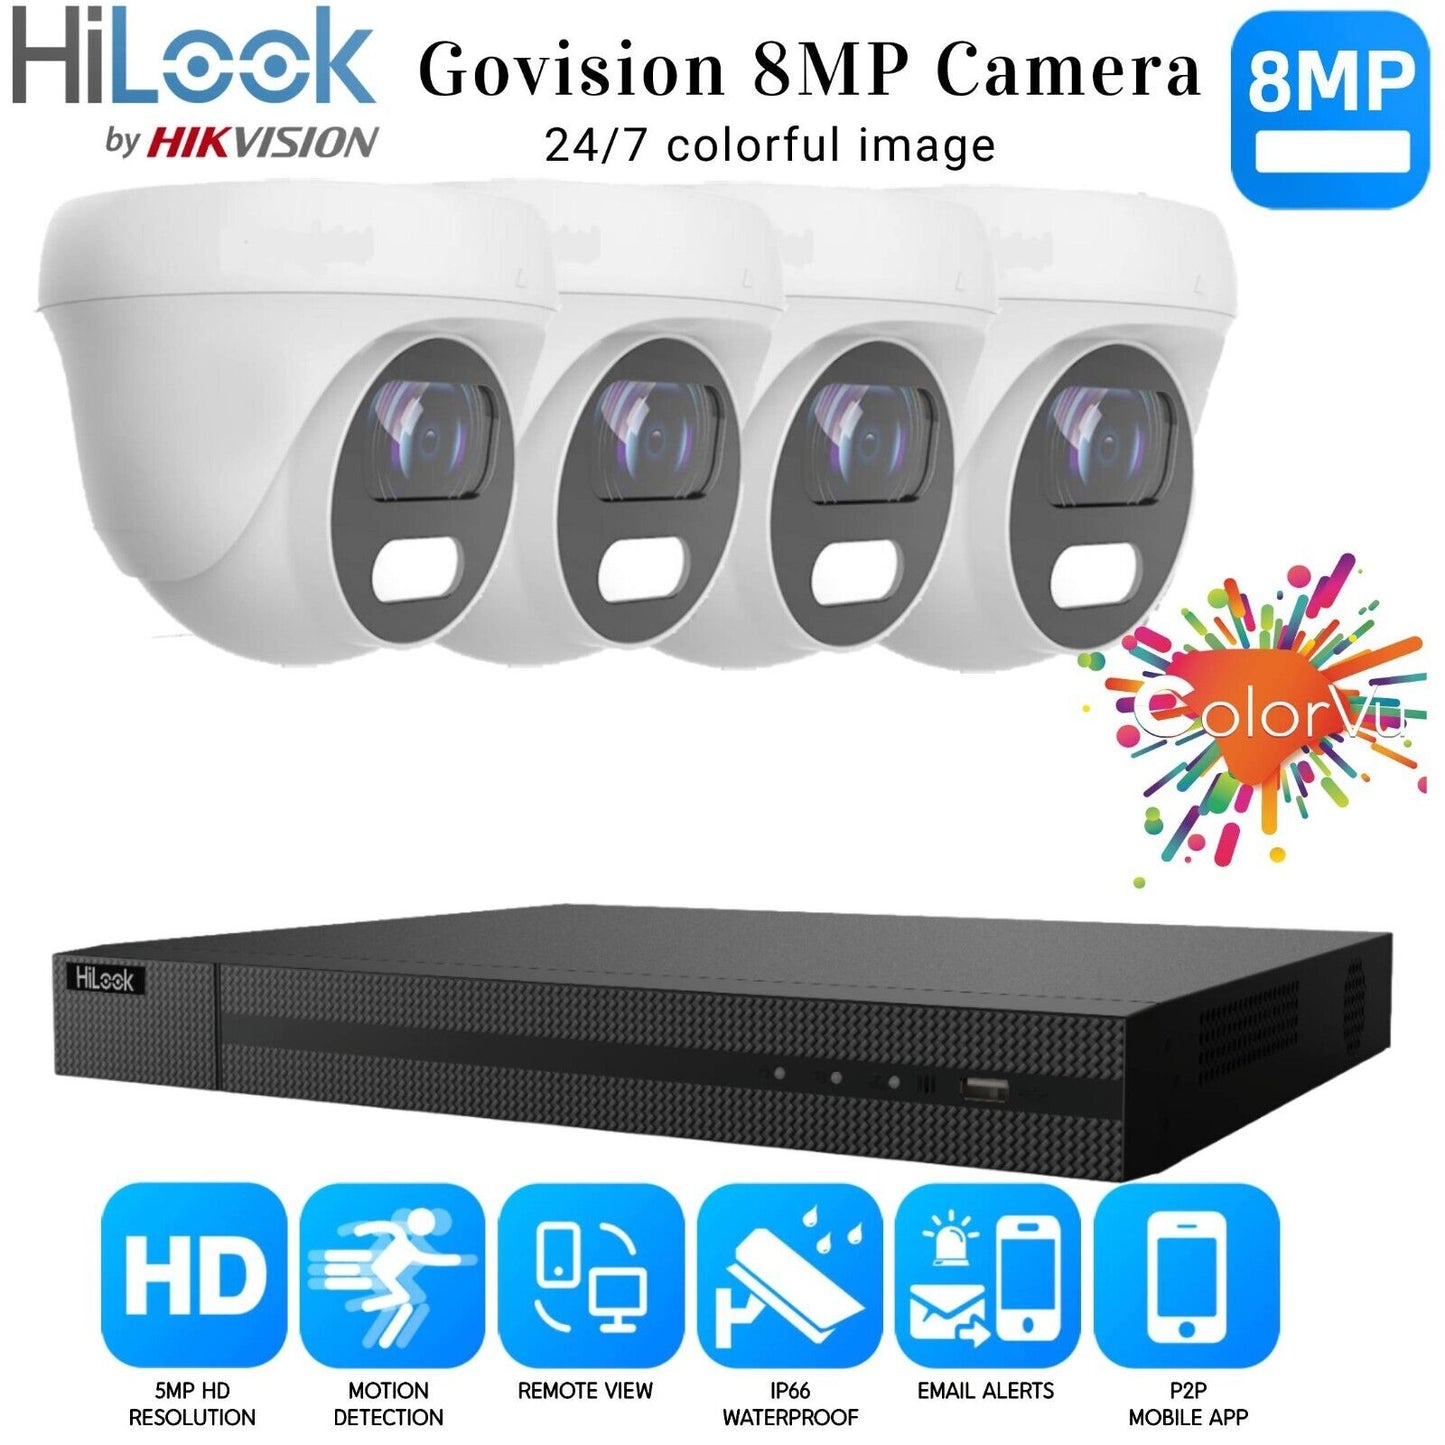 HIKVISION 8MP COLORVU CCTV SYSTEM UHD 8MP DVR 4K 24/7 COLORVu OUTDOOR CAMERA KIT 8CH DVR 4xCameras (white) 1TB HDD